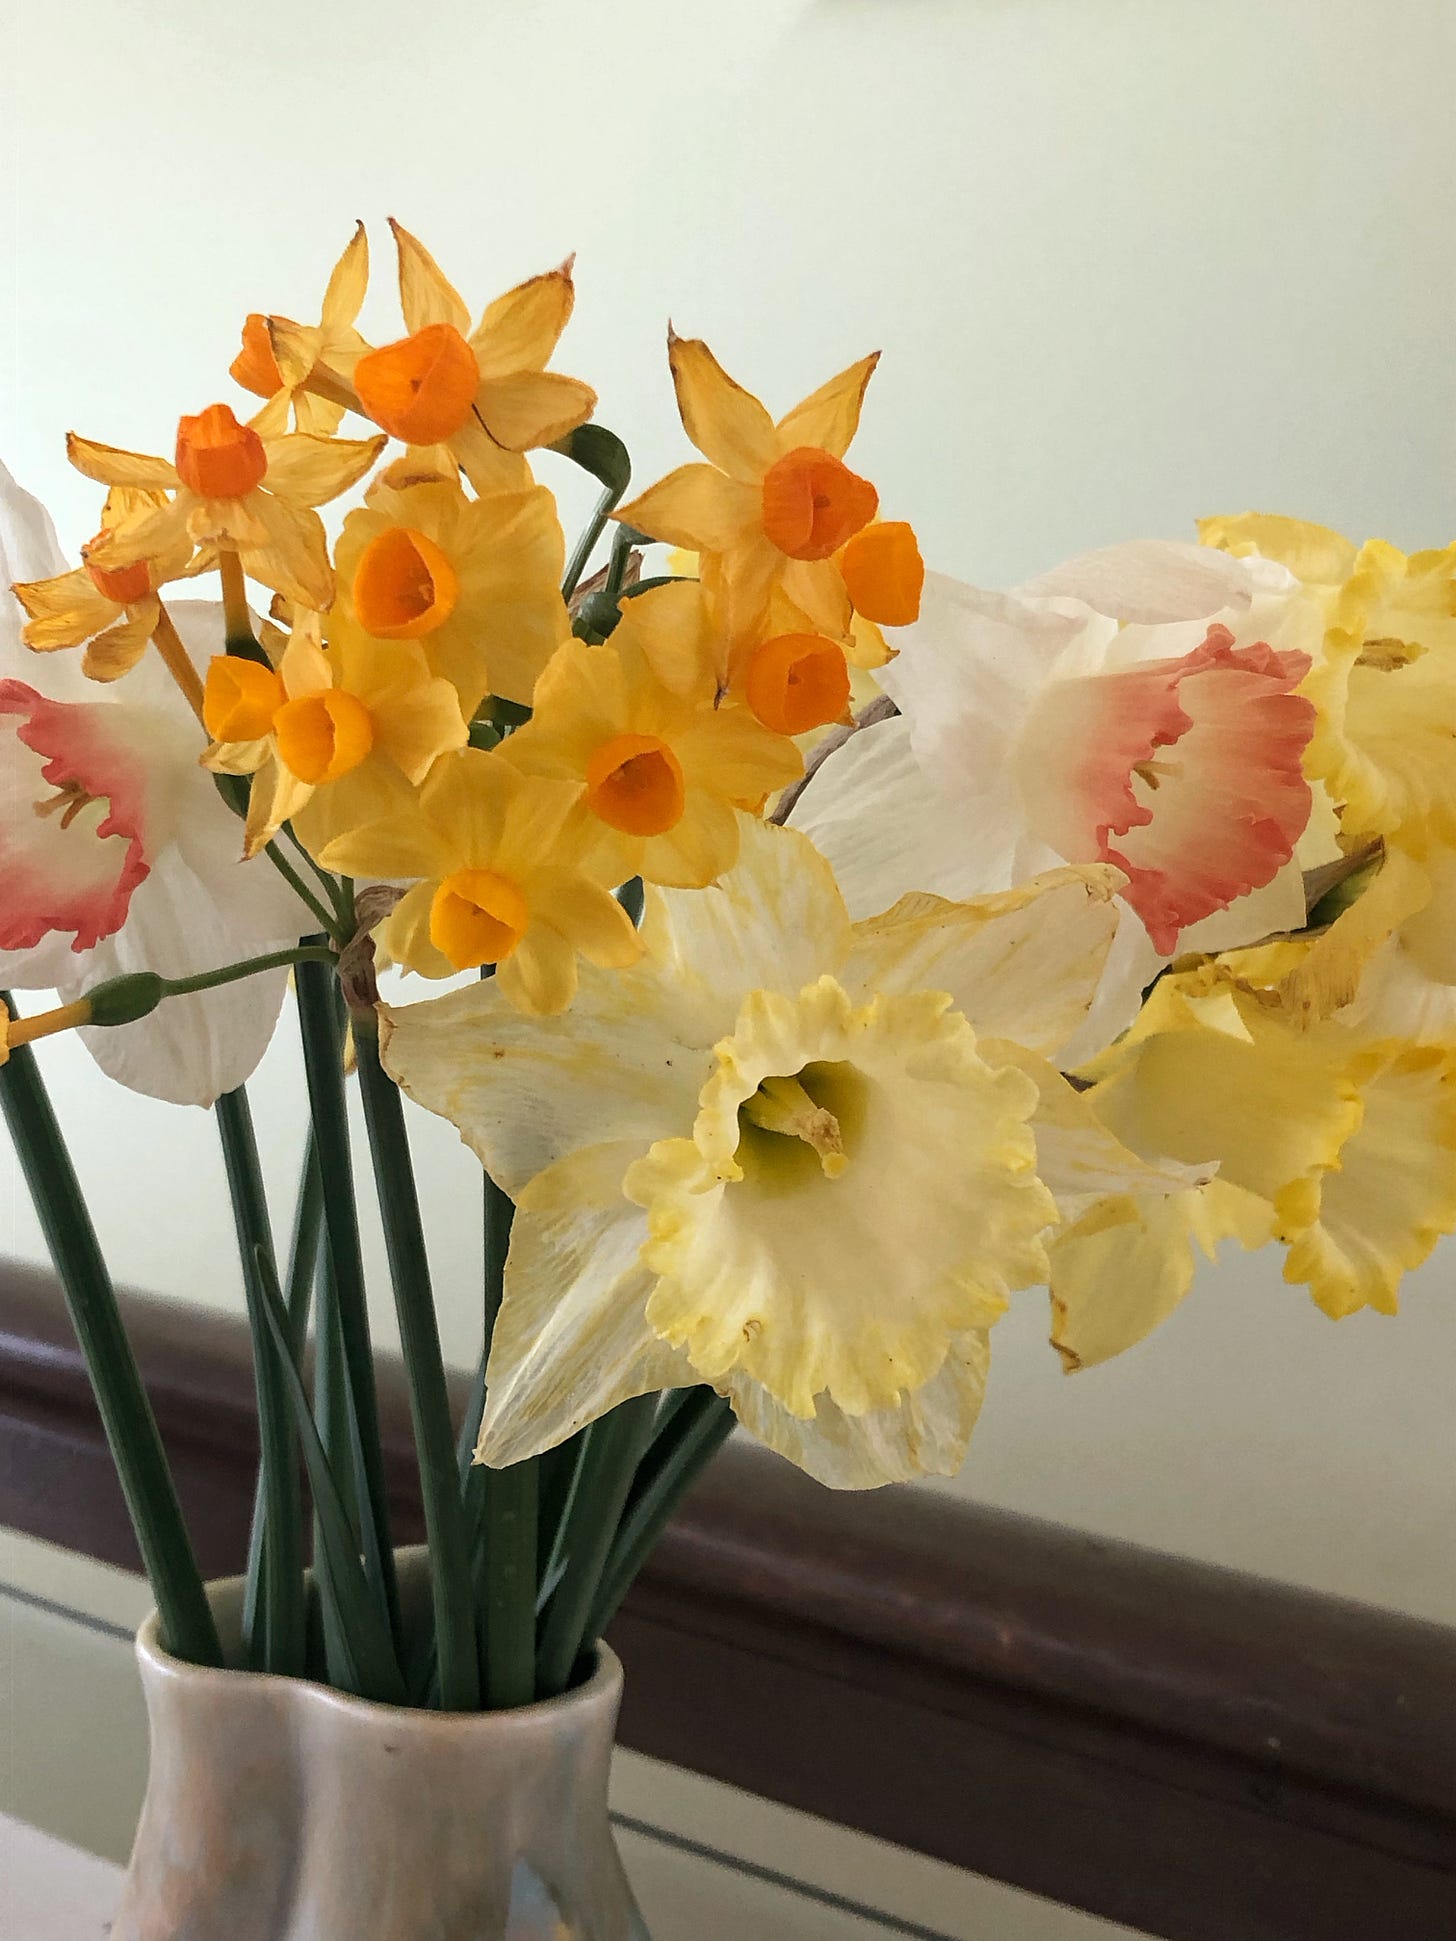 Vase full of daffodils